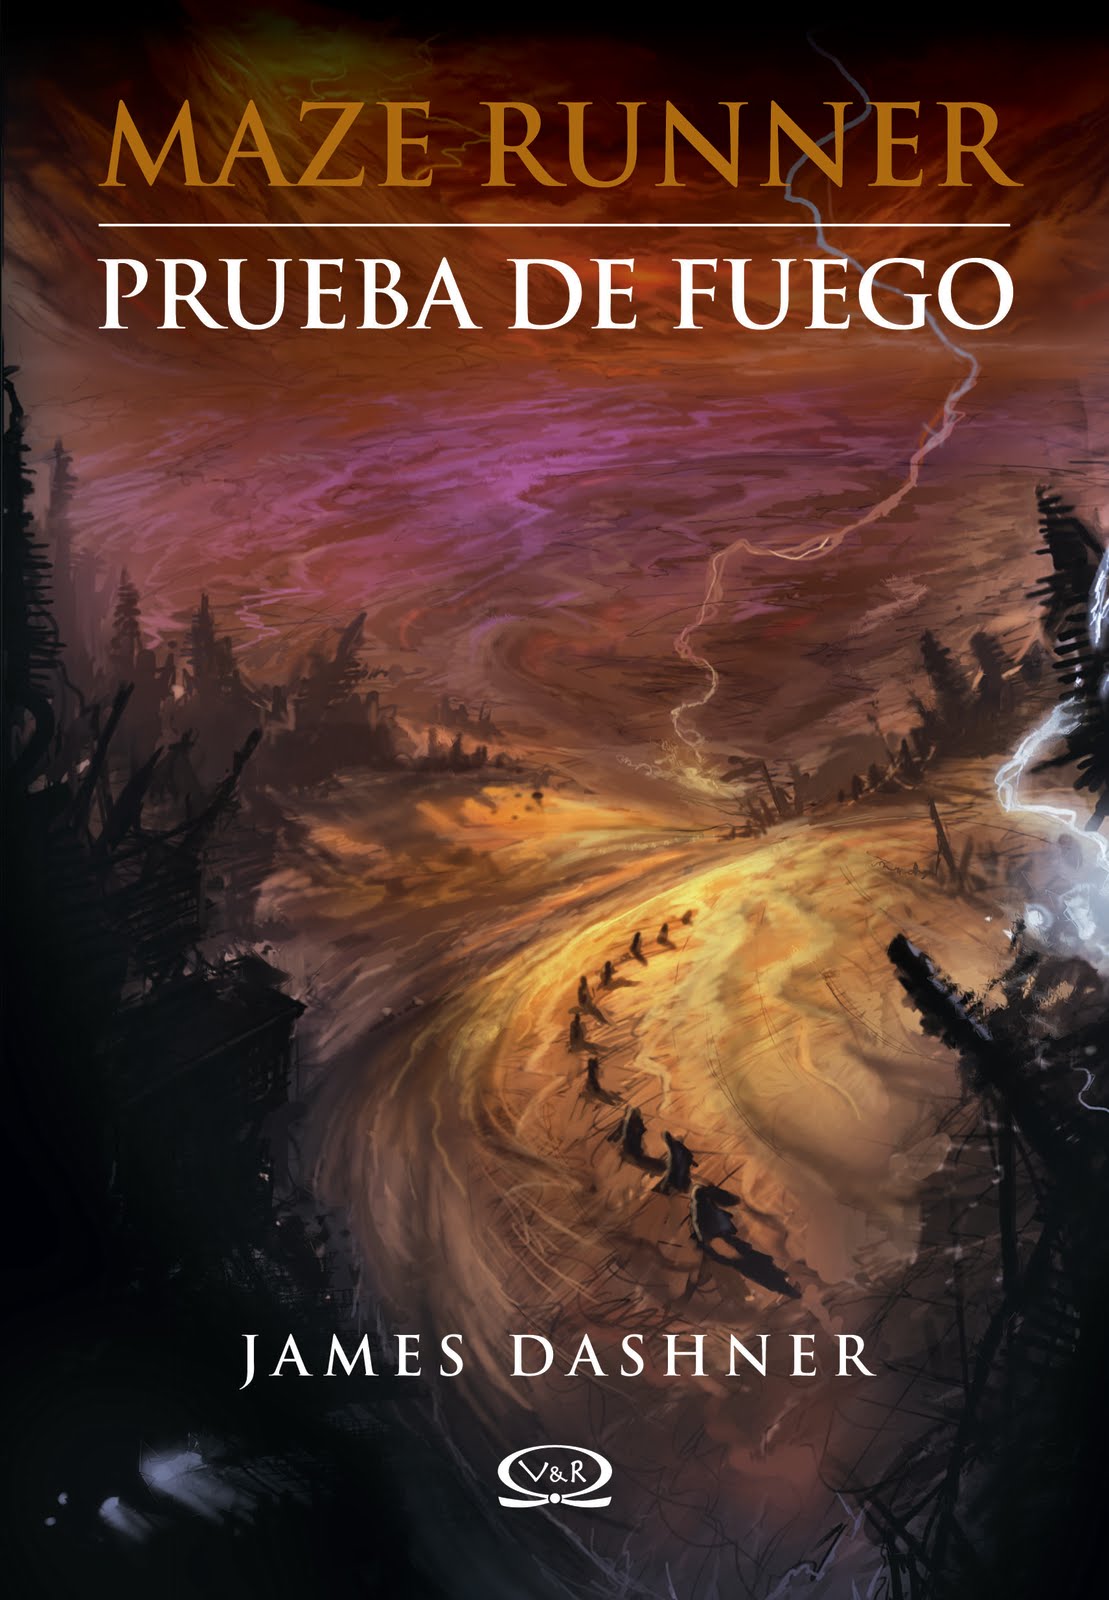 Libro de audio Maze Runner: Prueba de Fuego [2] – James Dashner